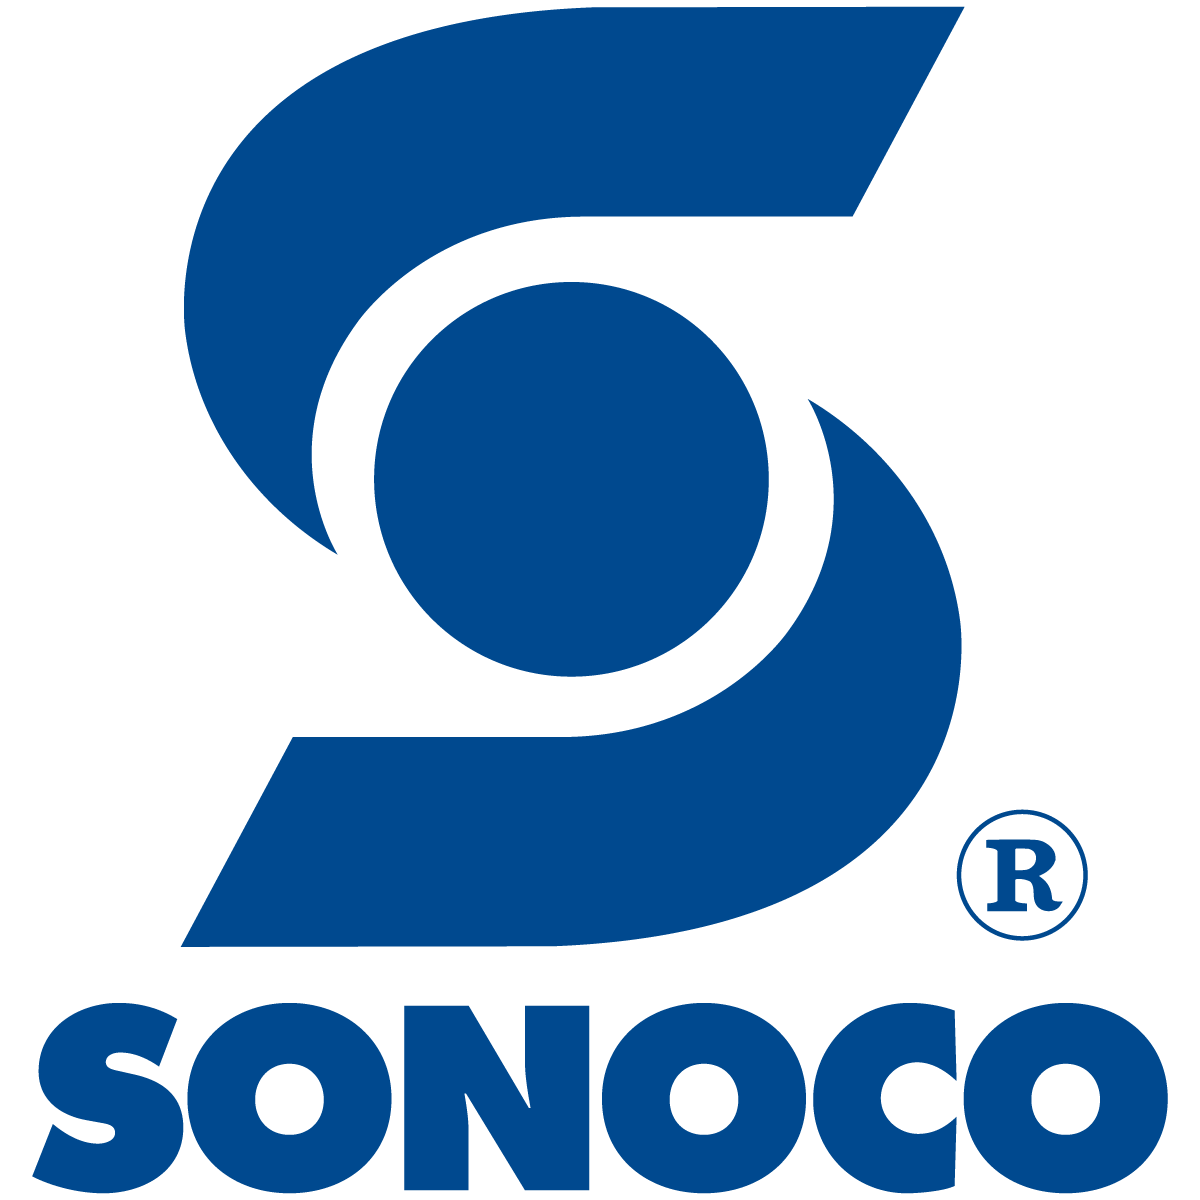 Sonoco Products Company